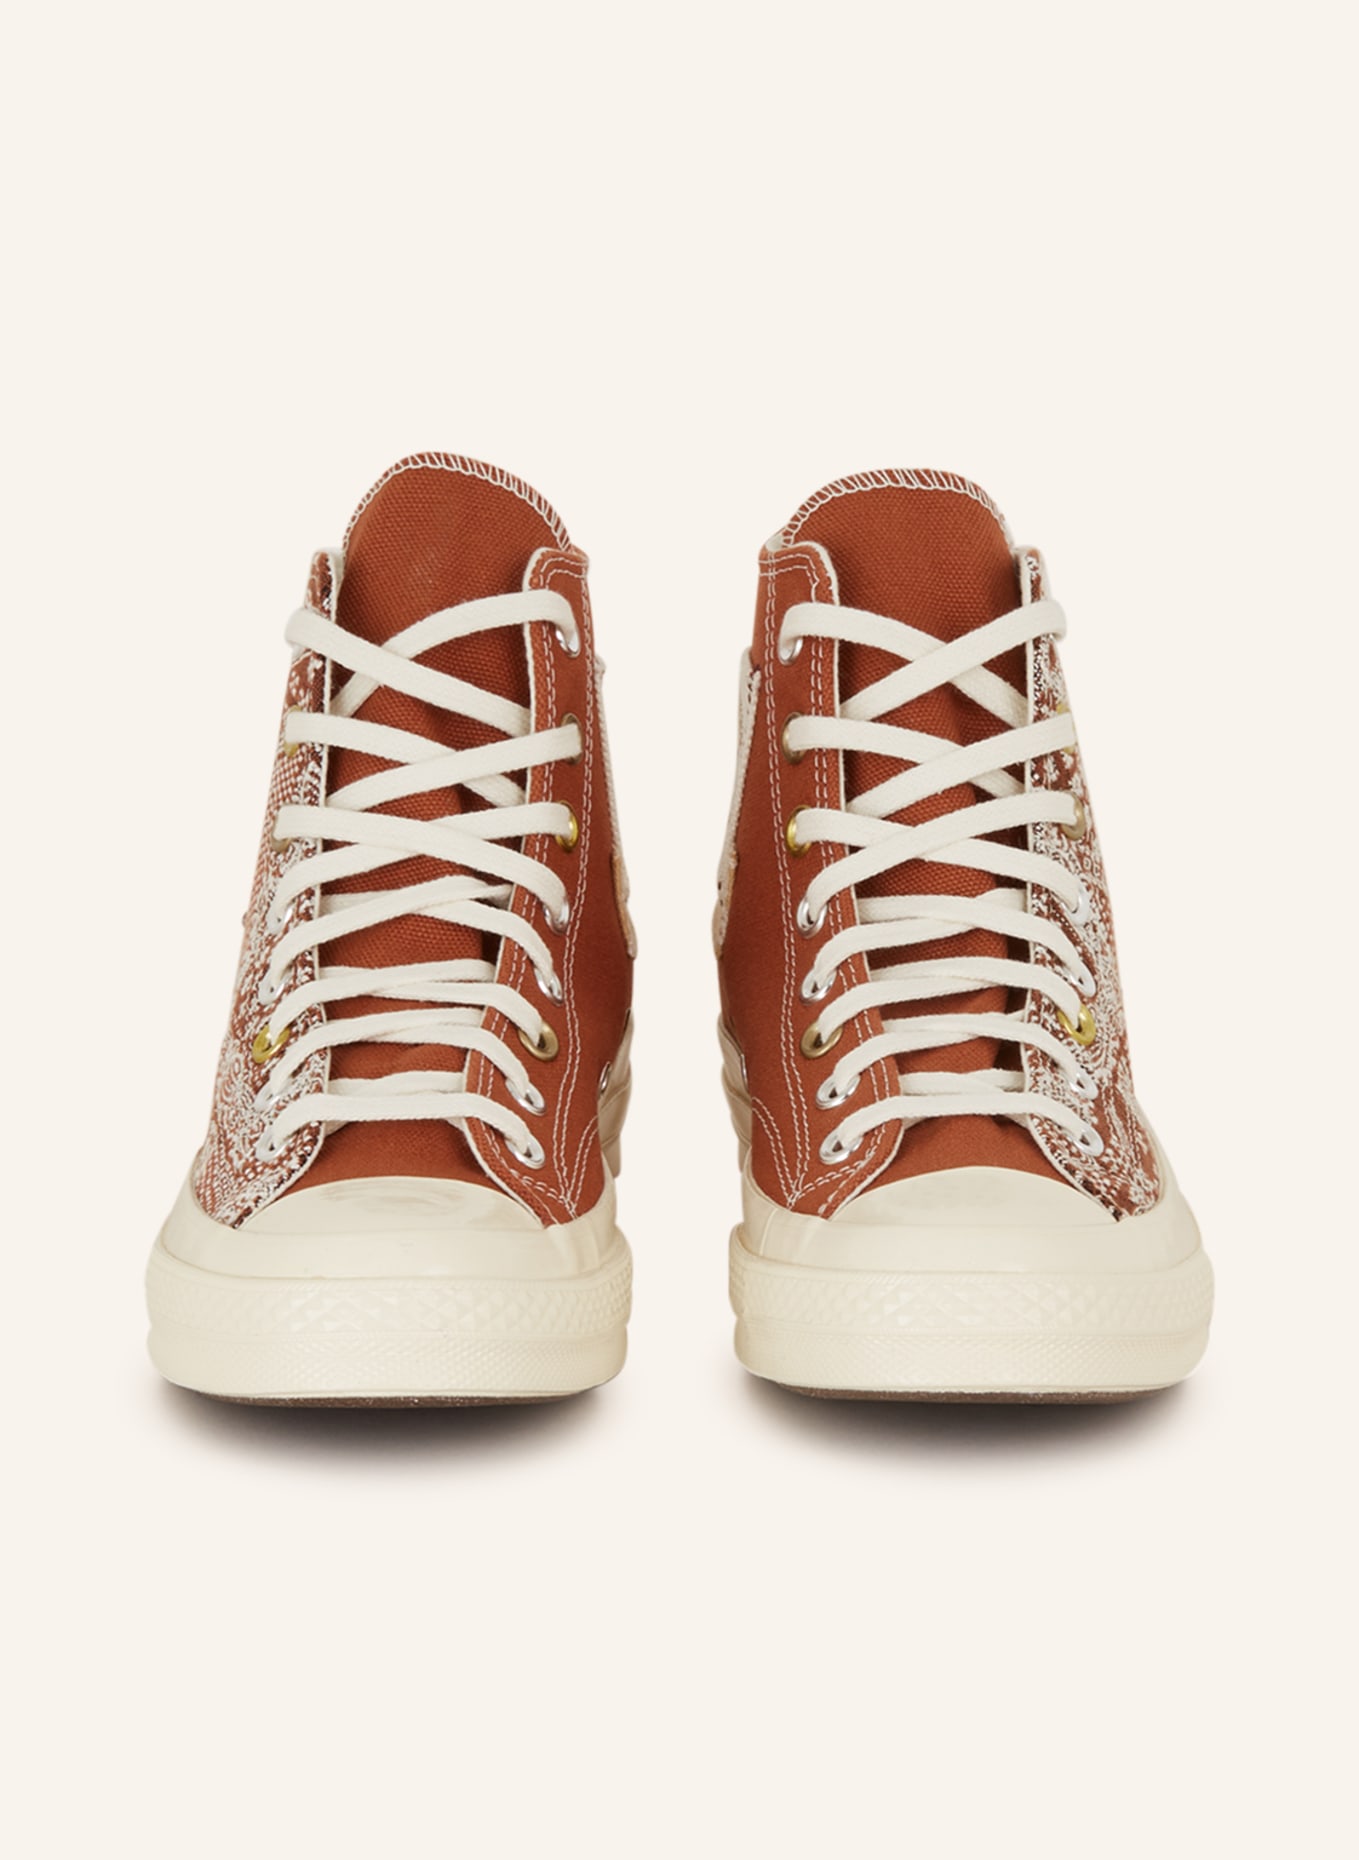 CONVERSE Hightop-Sneaker CHUCK 70, Farbe: DUNKELORANGE/ WEISS (Bild 3)